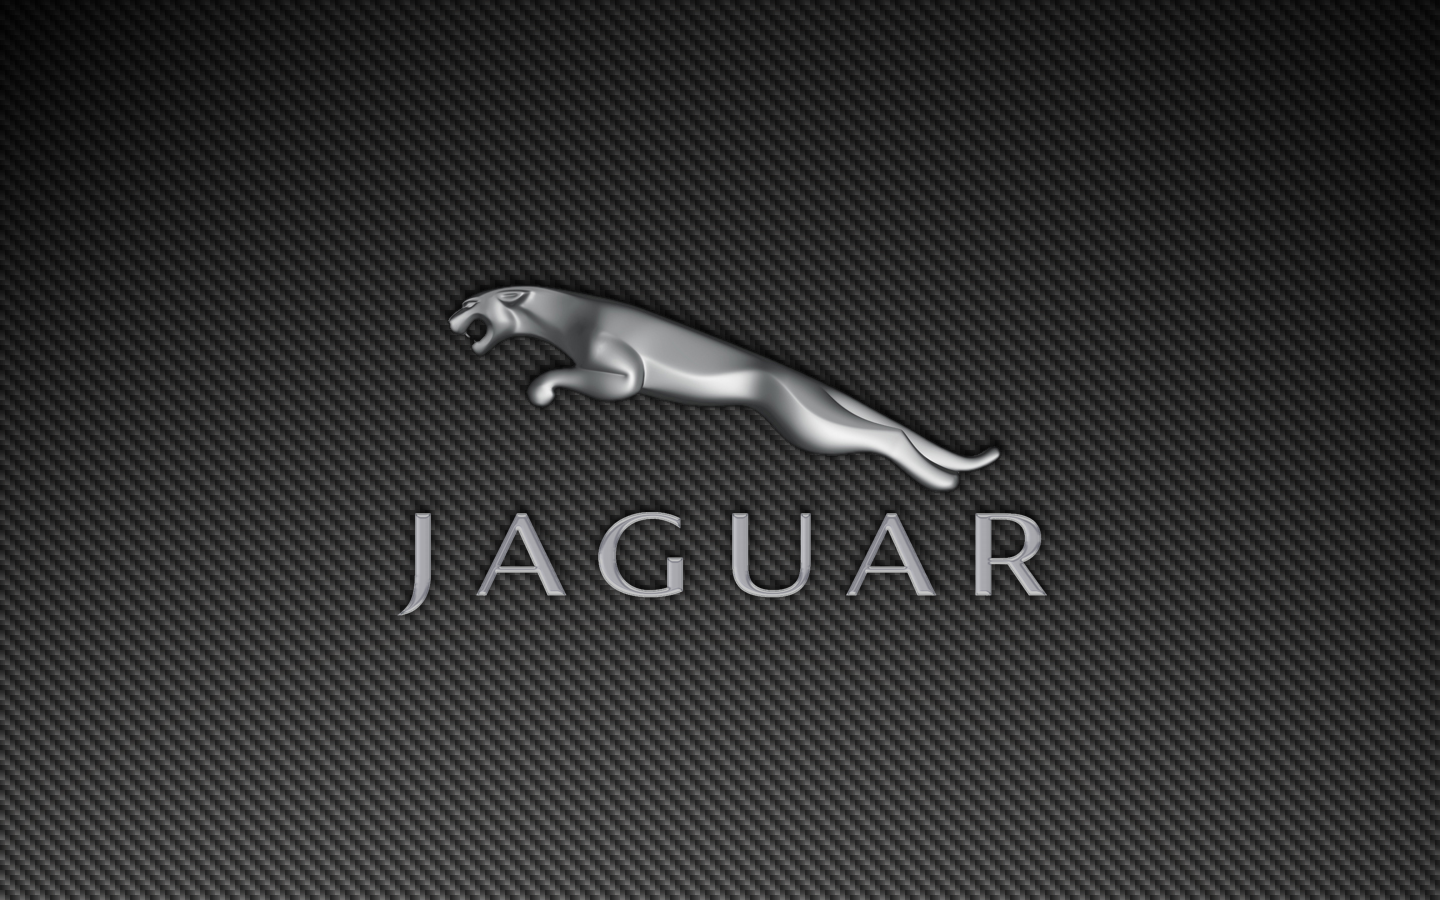 New Jaguar Logo HD Widescreen Wallpaper Background For PC Desktop